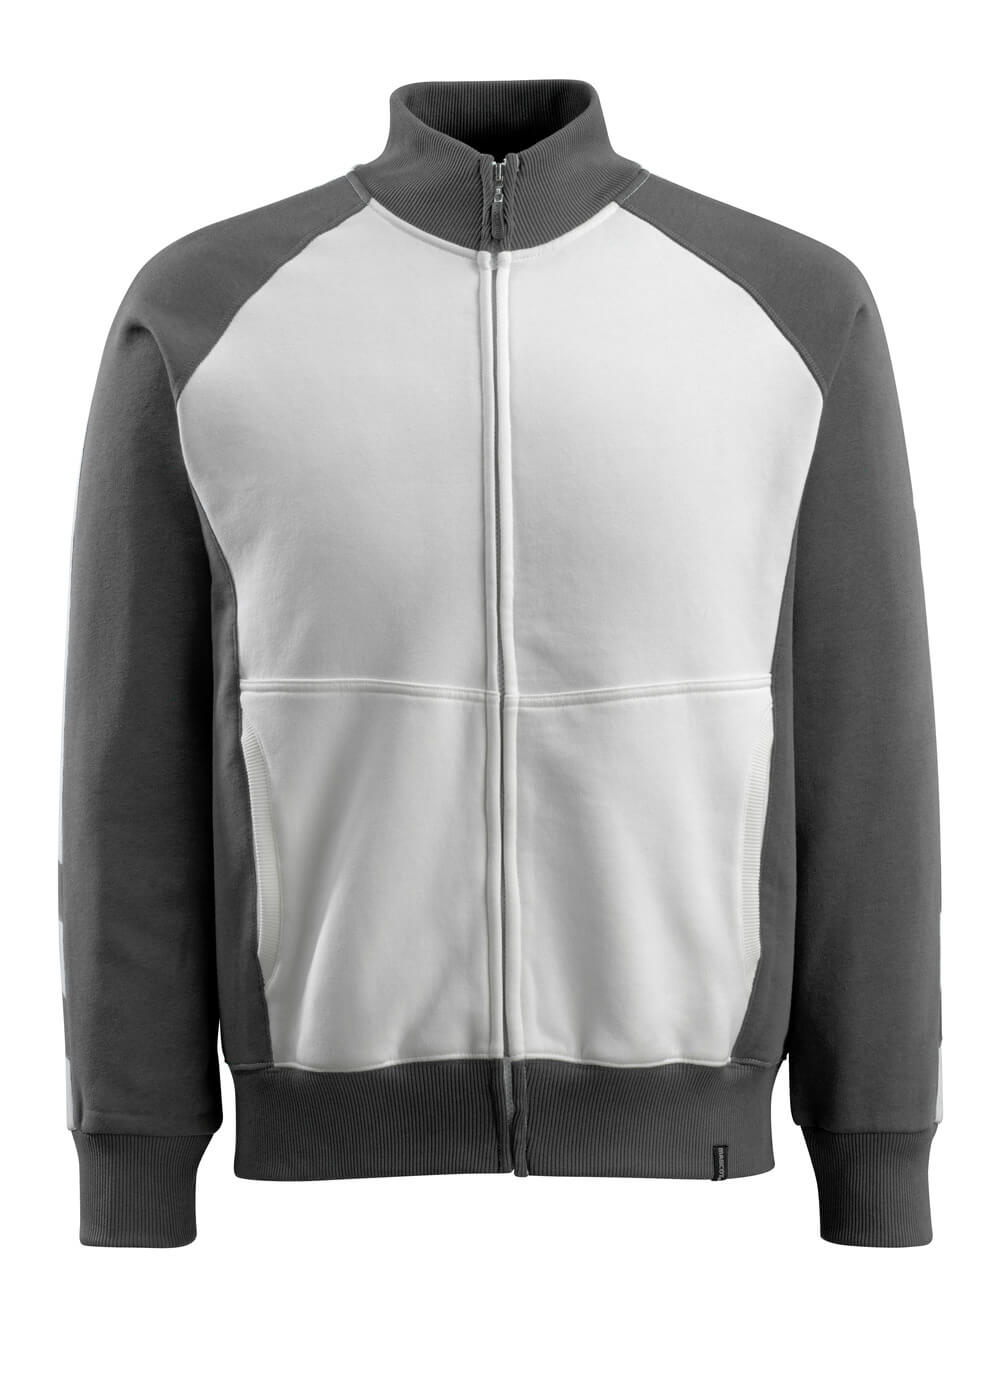 Mascot UNIQUE  Amberg Sweatshirt with zipper 50565 white/dark anthracite